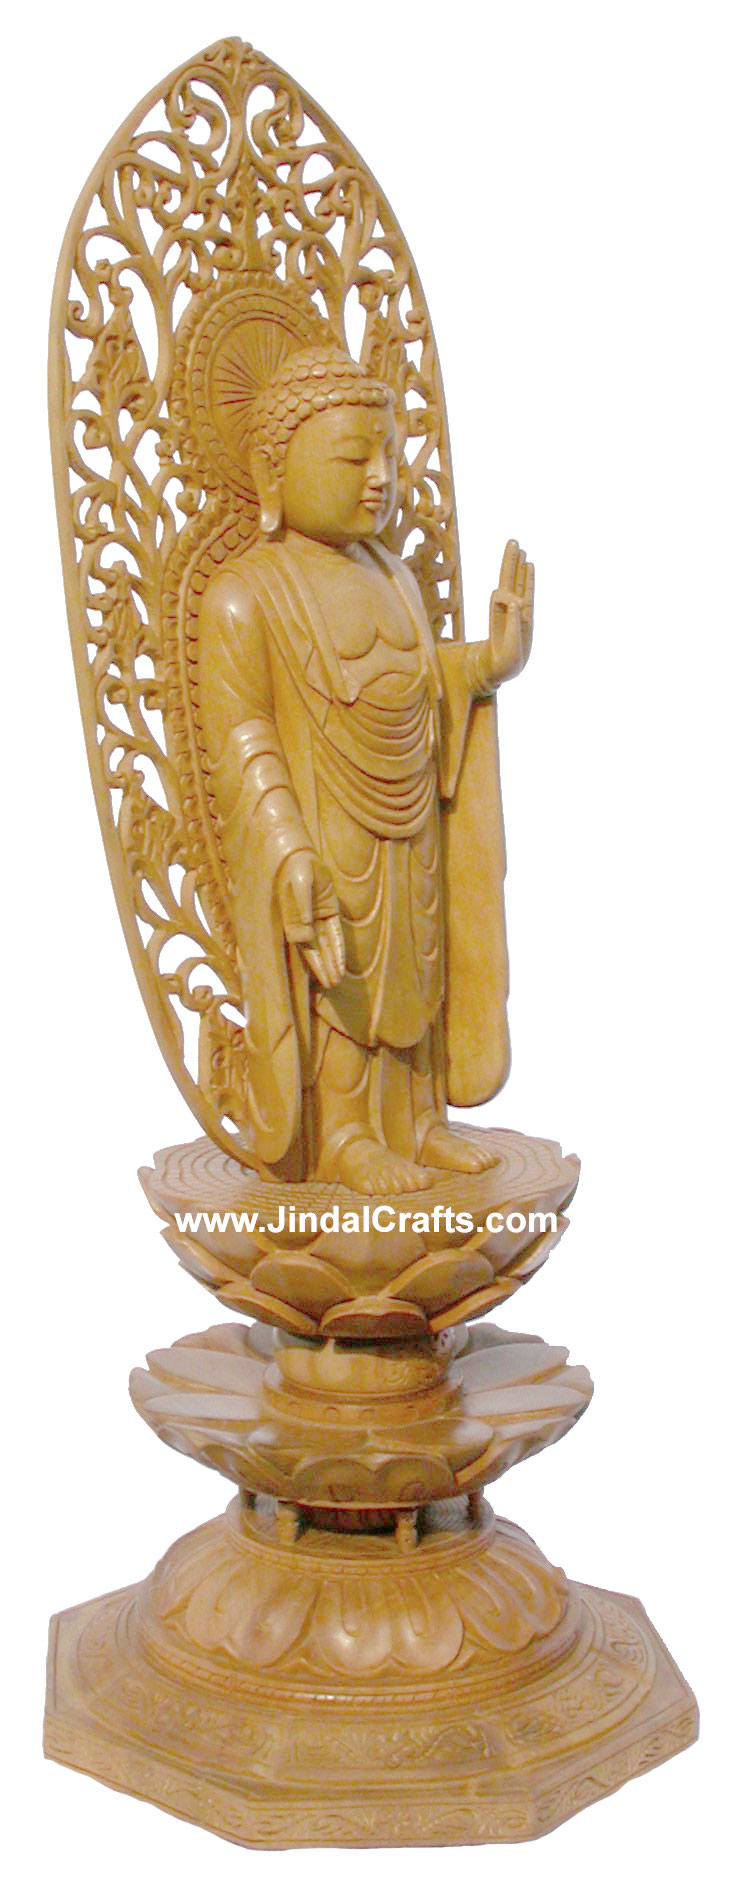 Handmade Wood Sculpture Buddha in Meditation